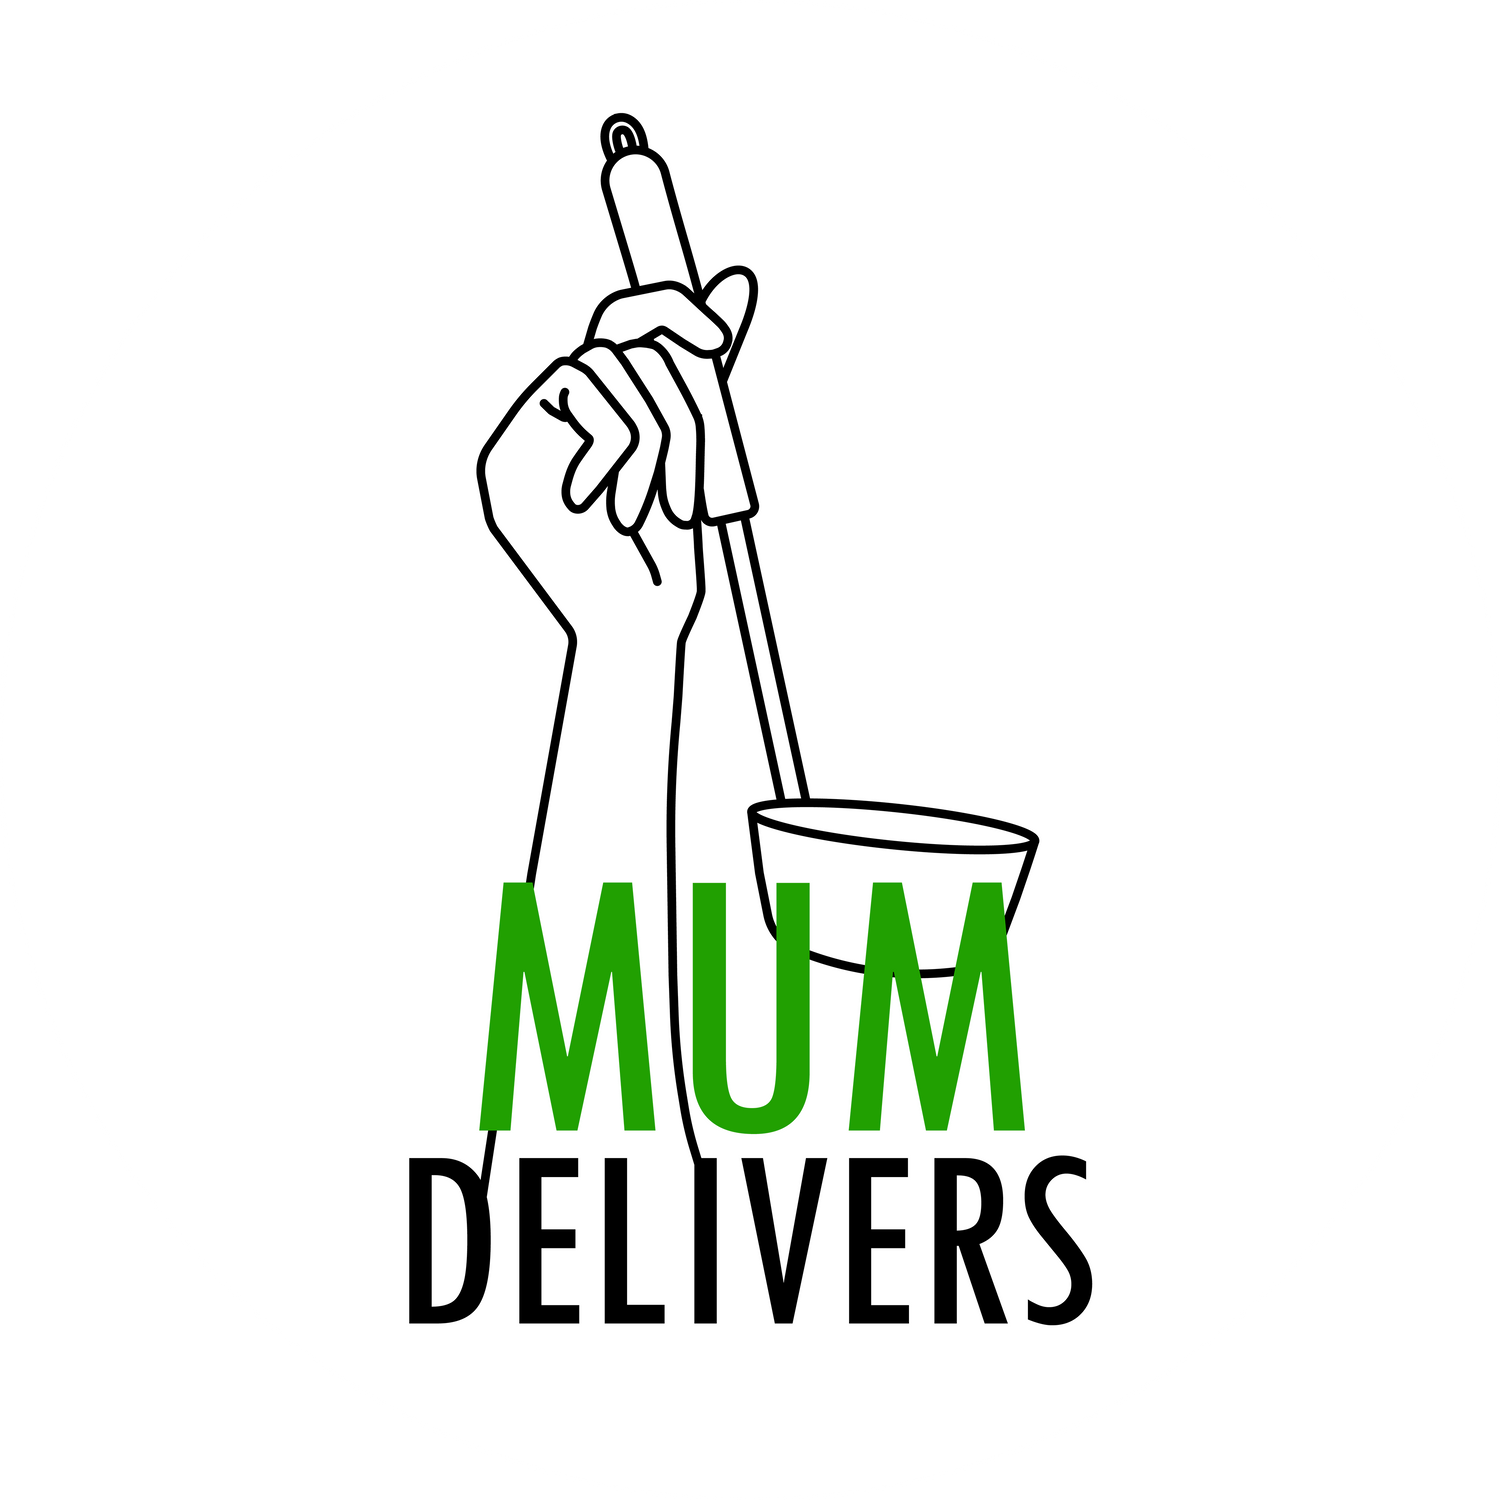 MUMdelivers Logo